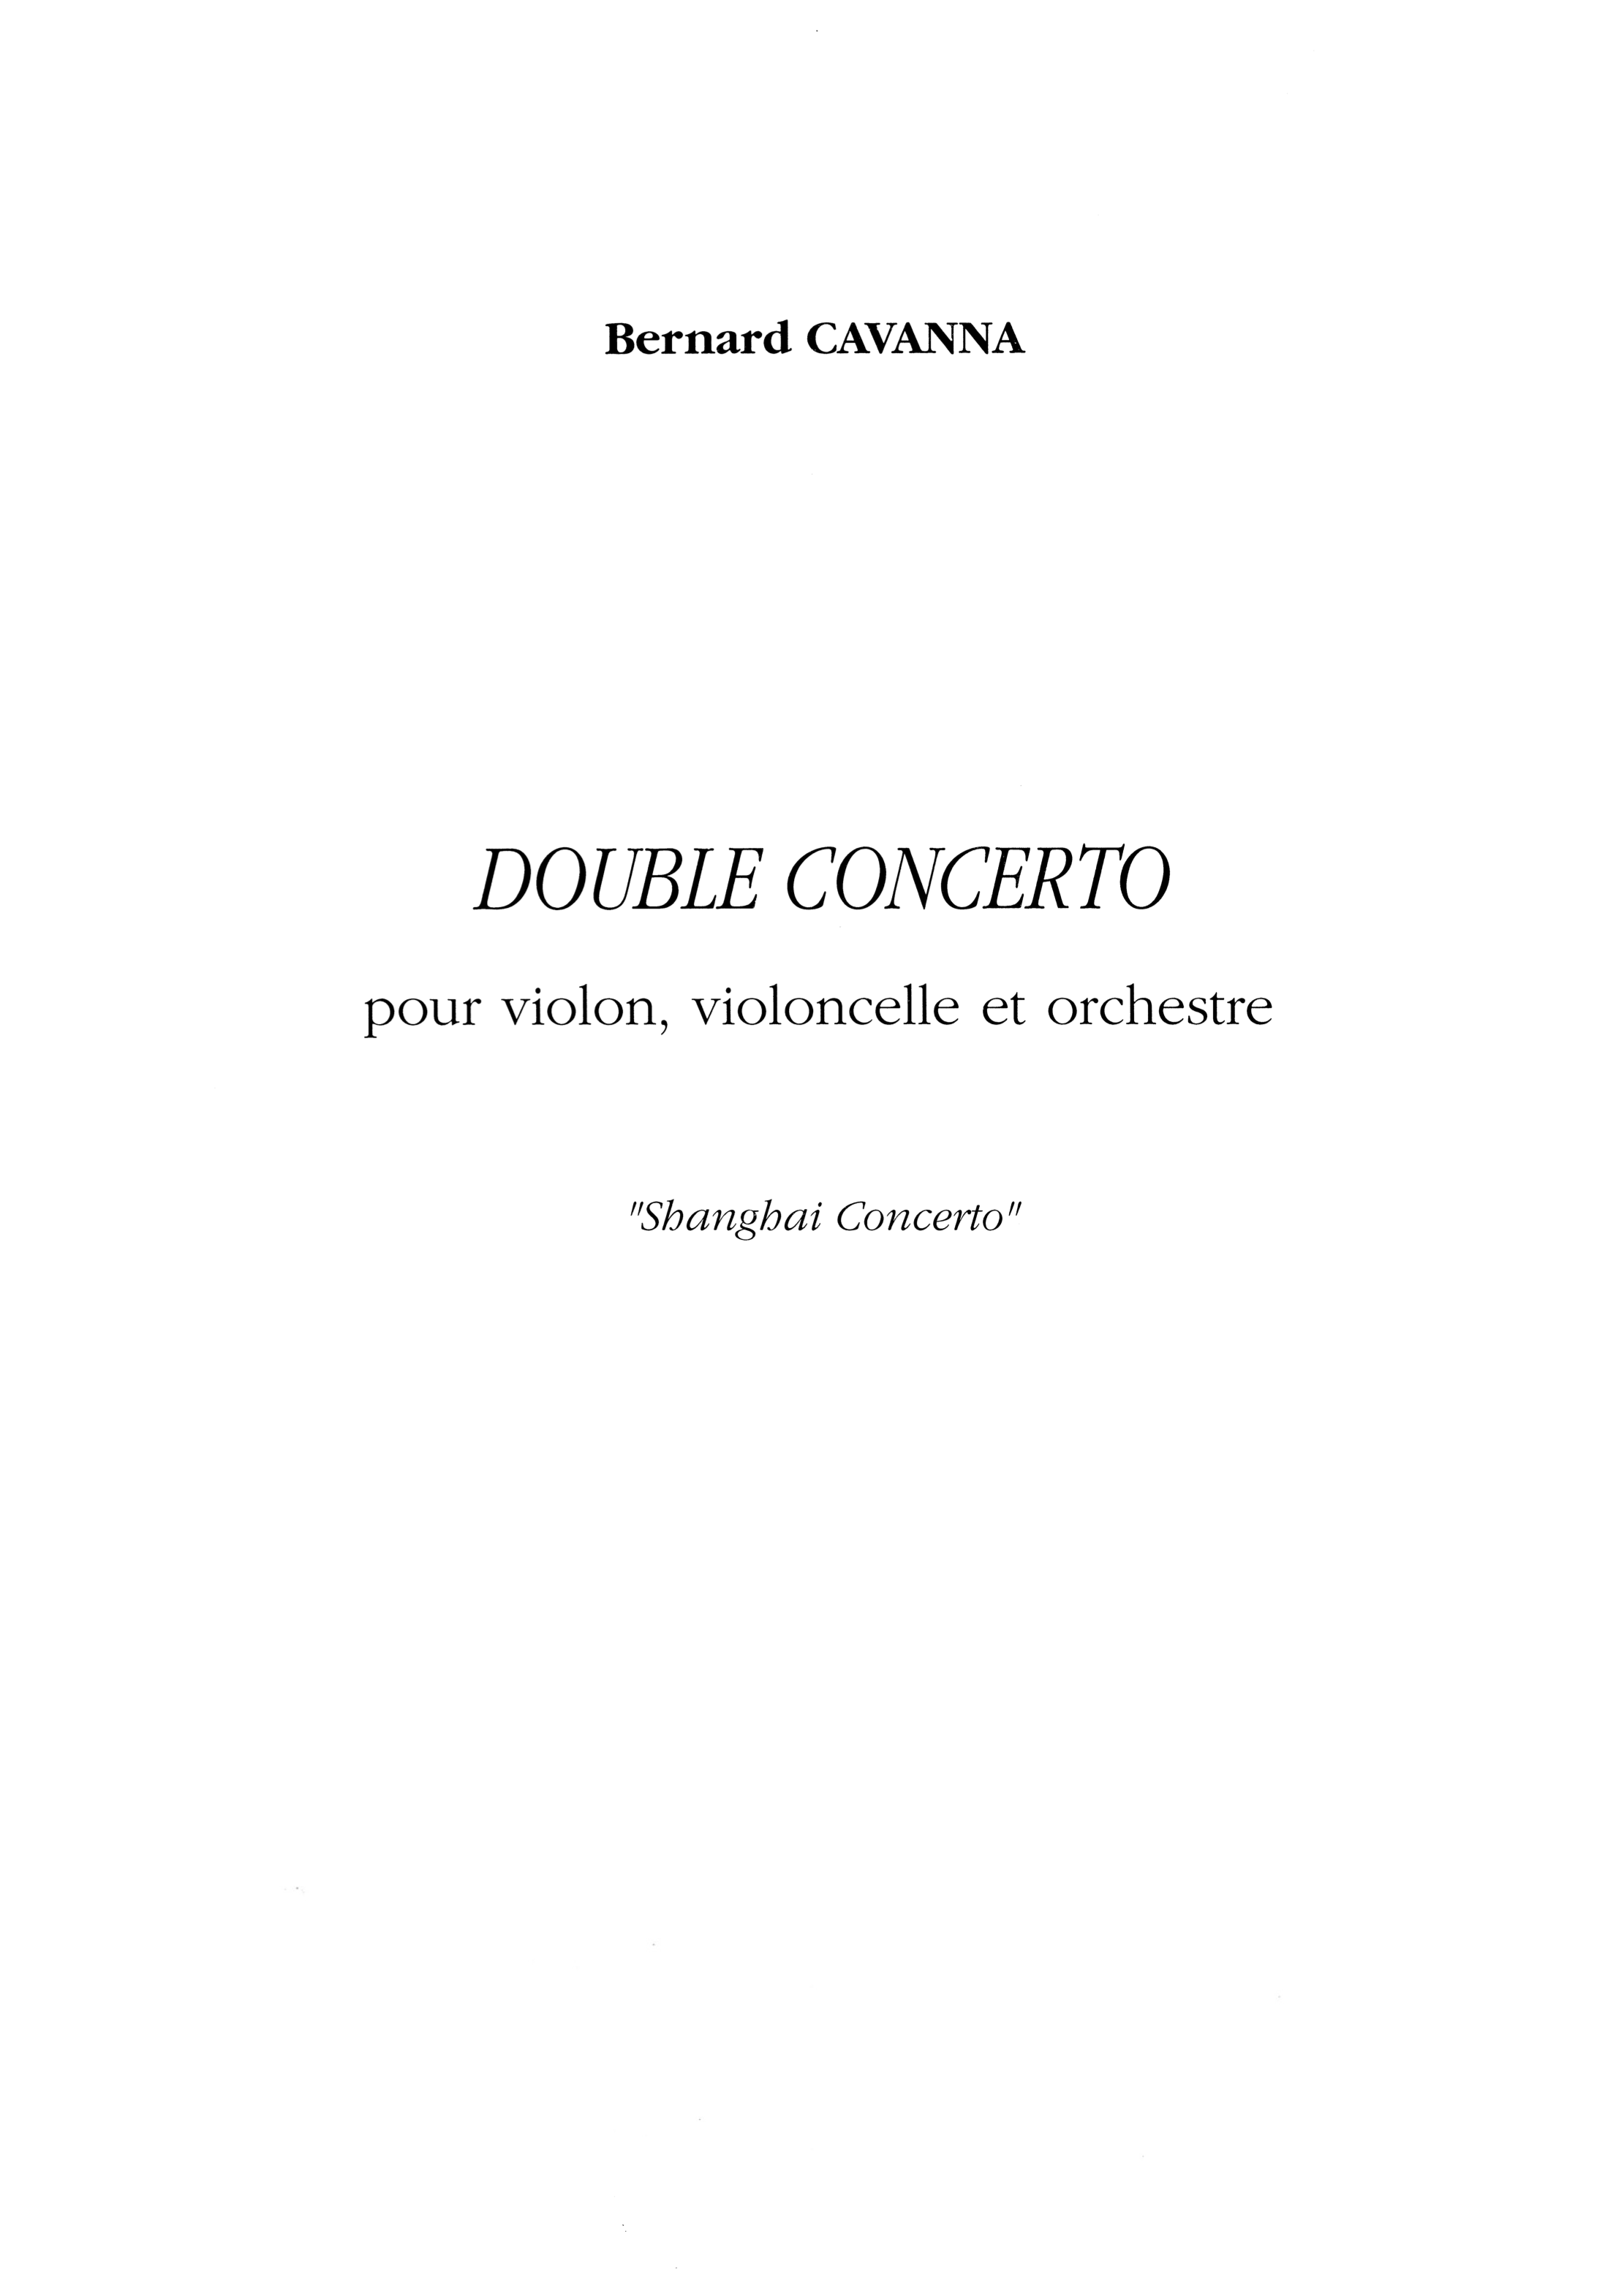 double concerto bernard cavanna